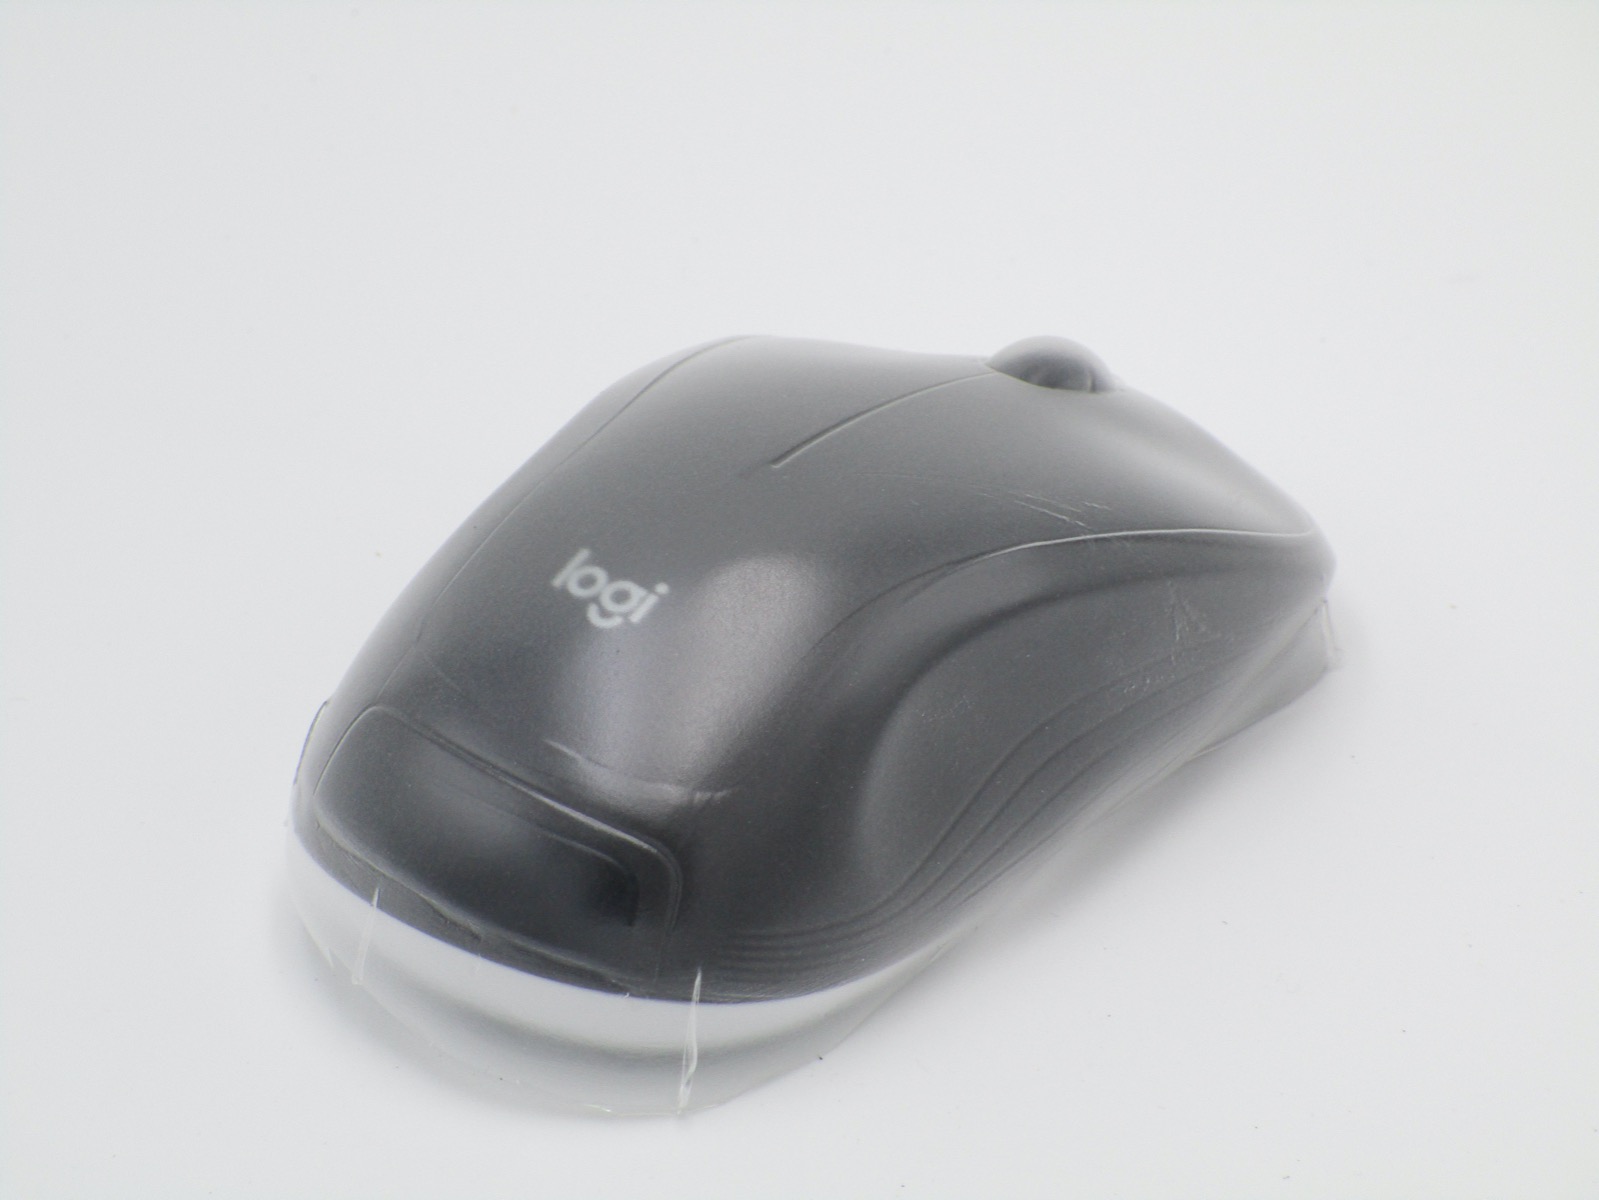 Logitech MK540 Advance Mouse Cover